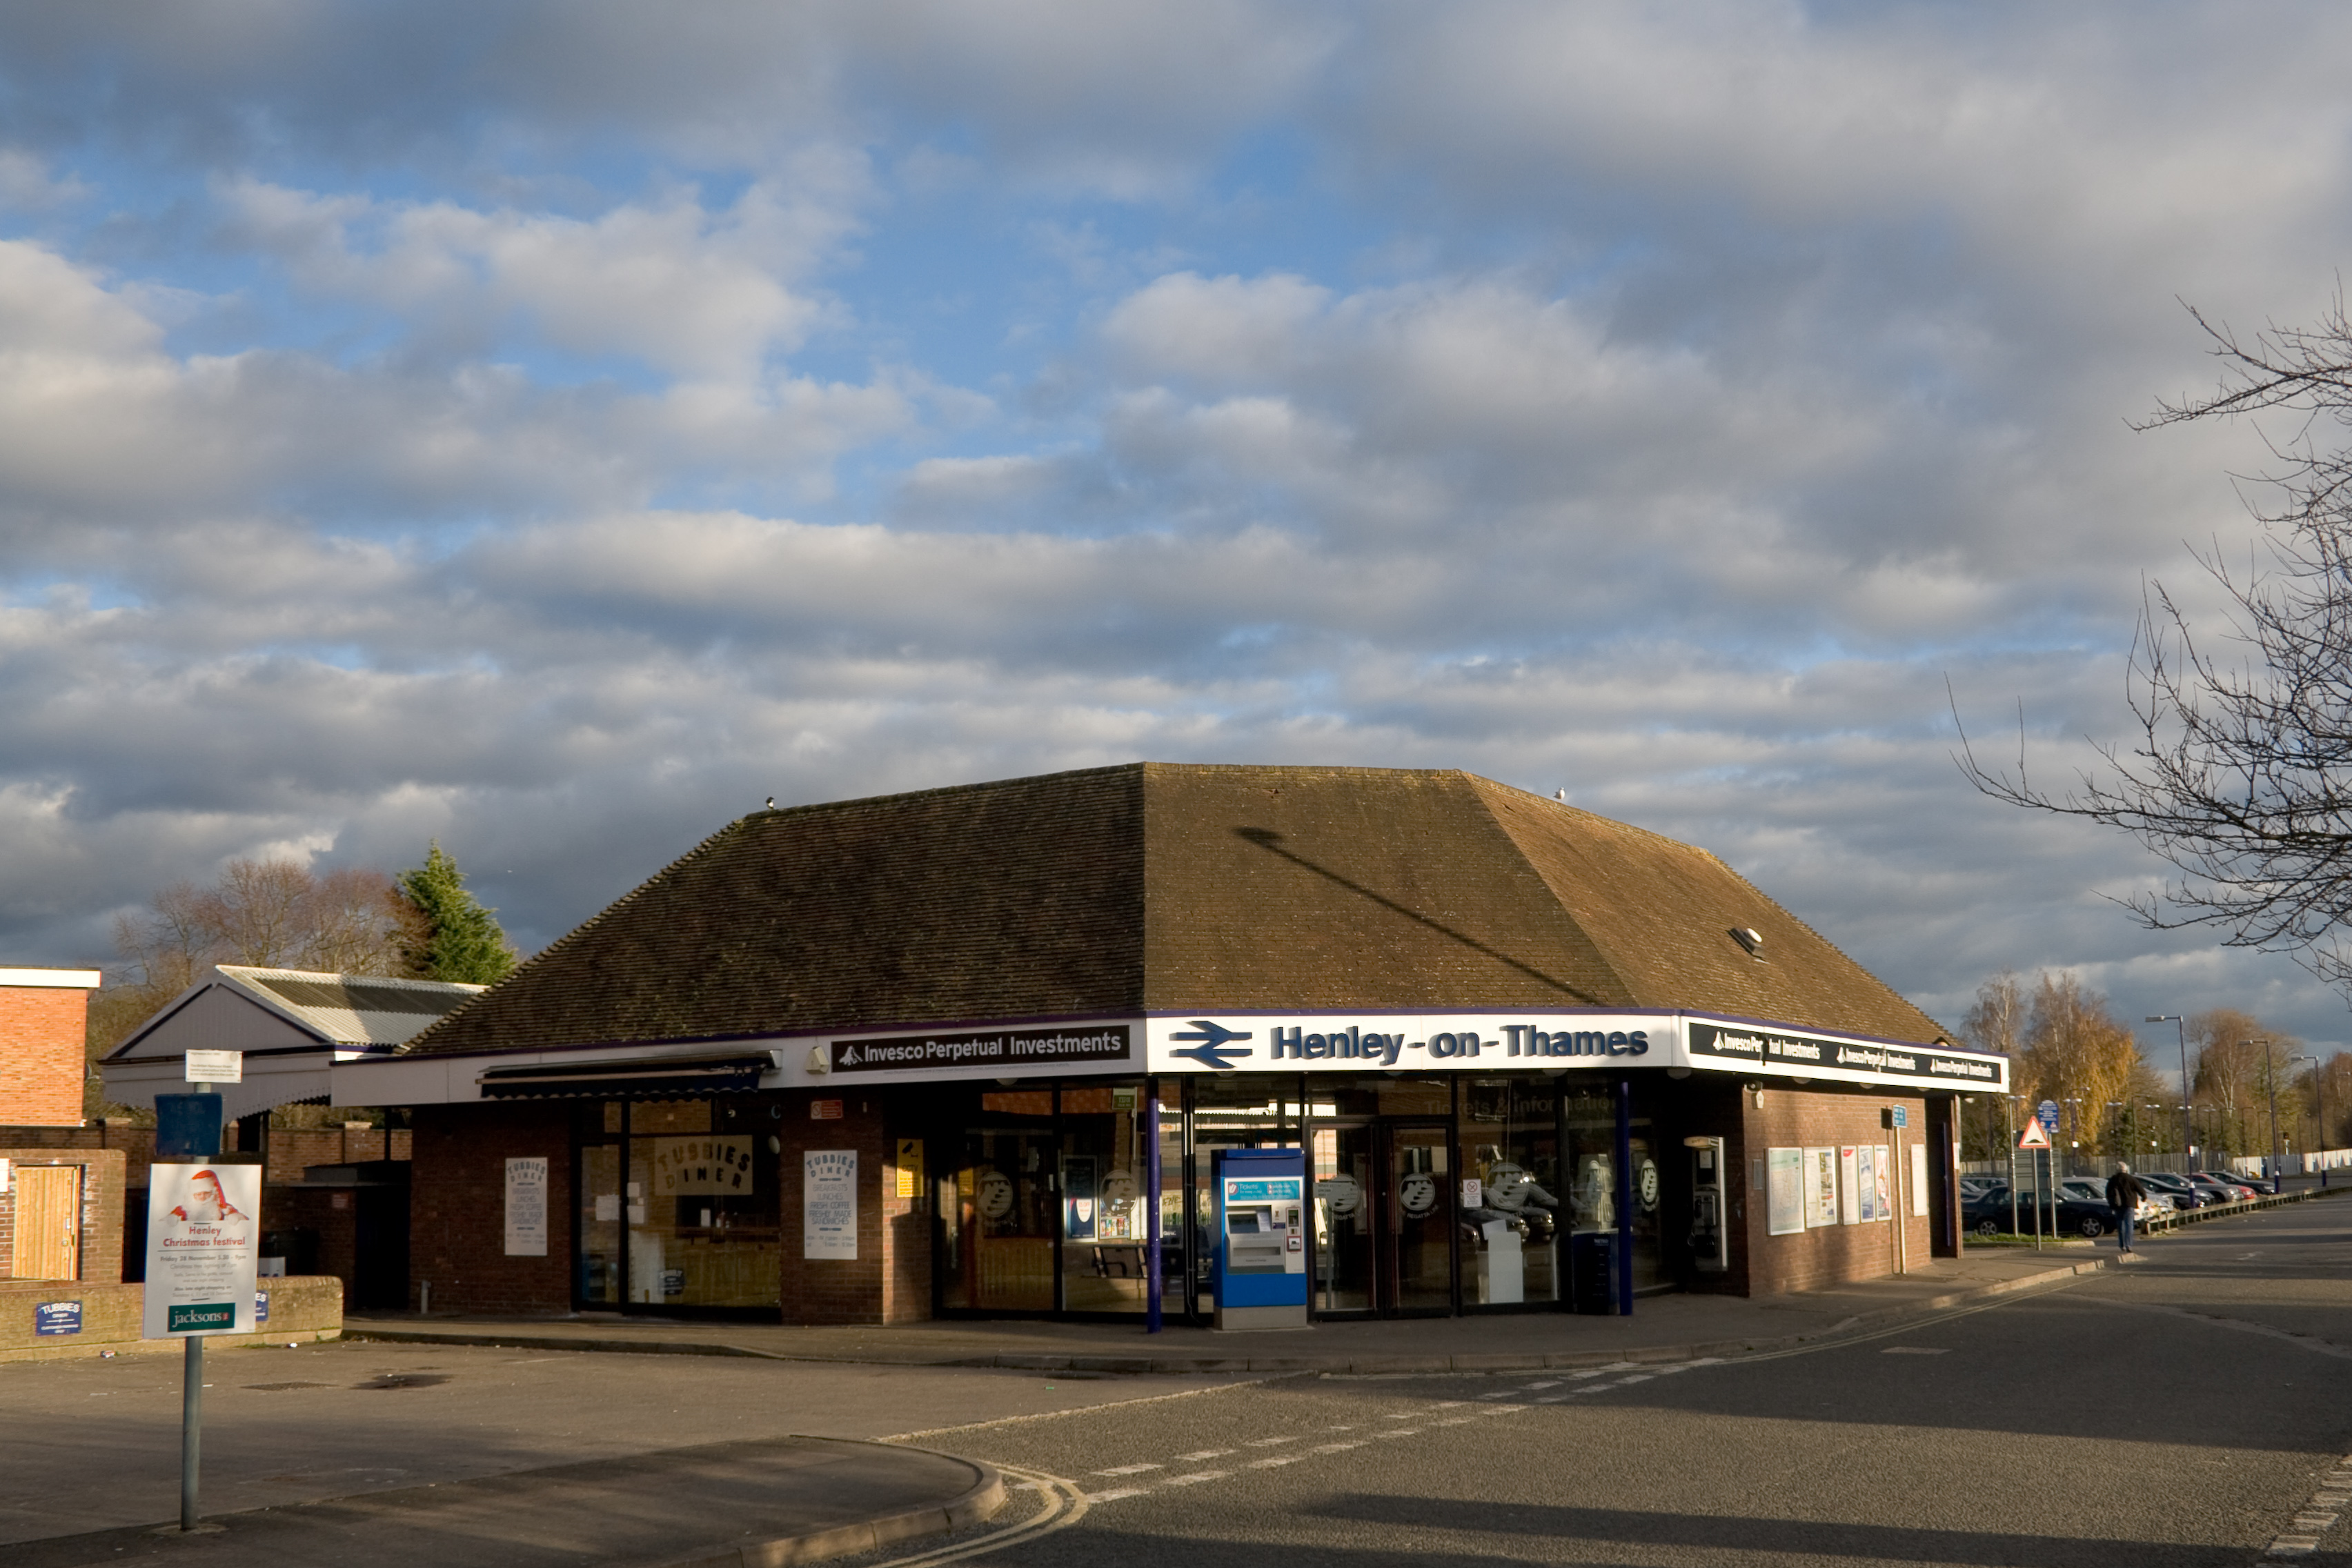 Henley-on-Thames railway station